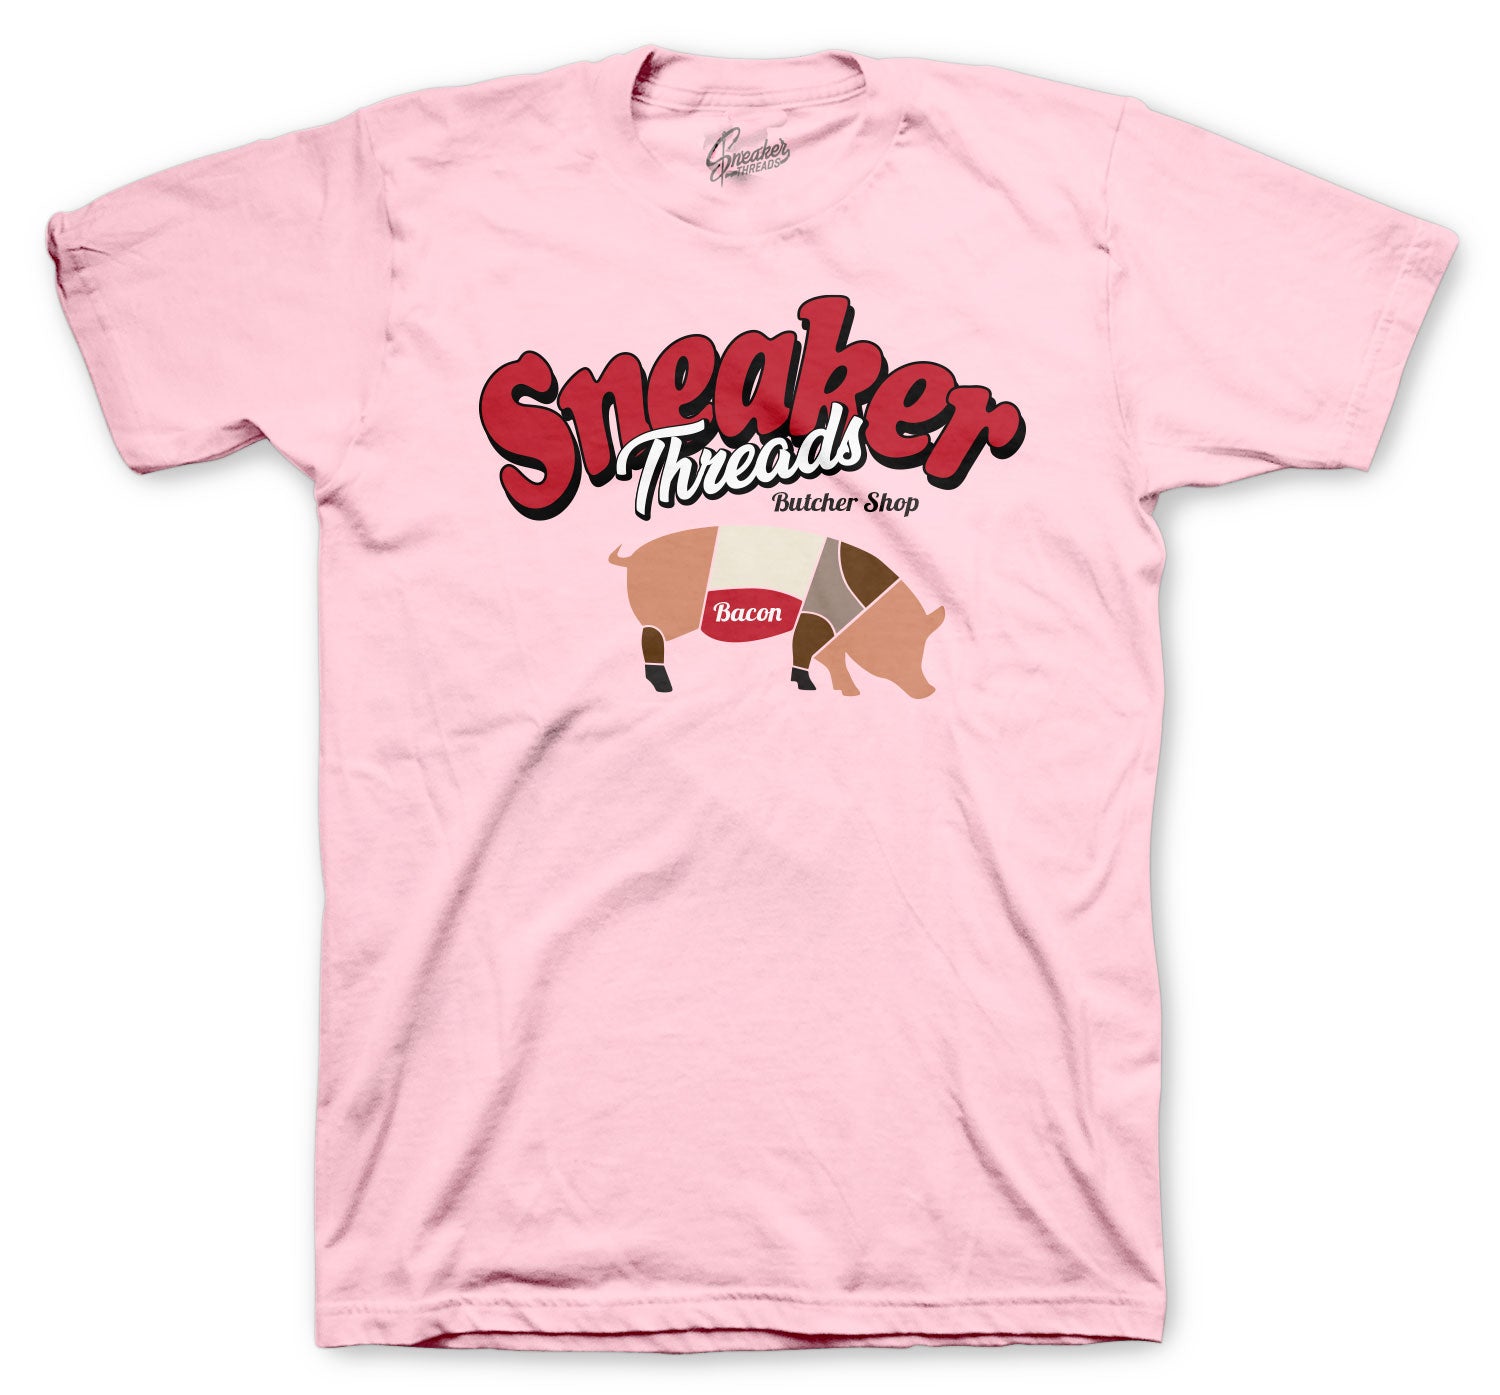 Air Max Bacon Shirt - Butcher Shop - Light Pink